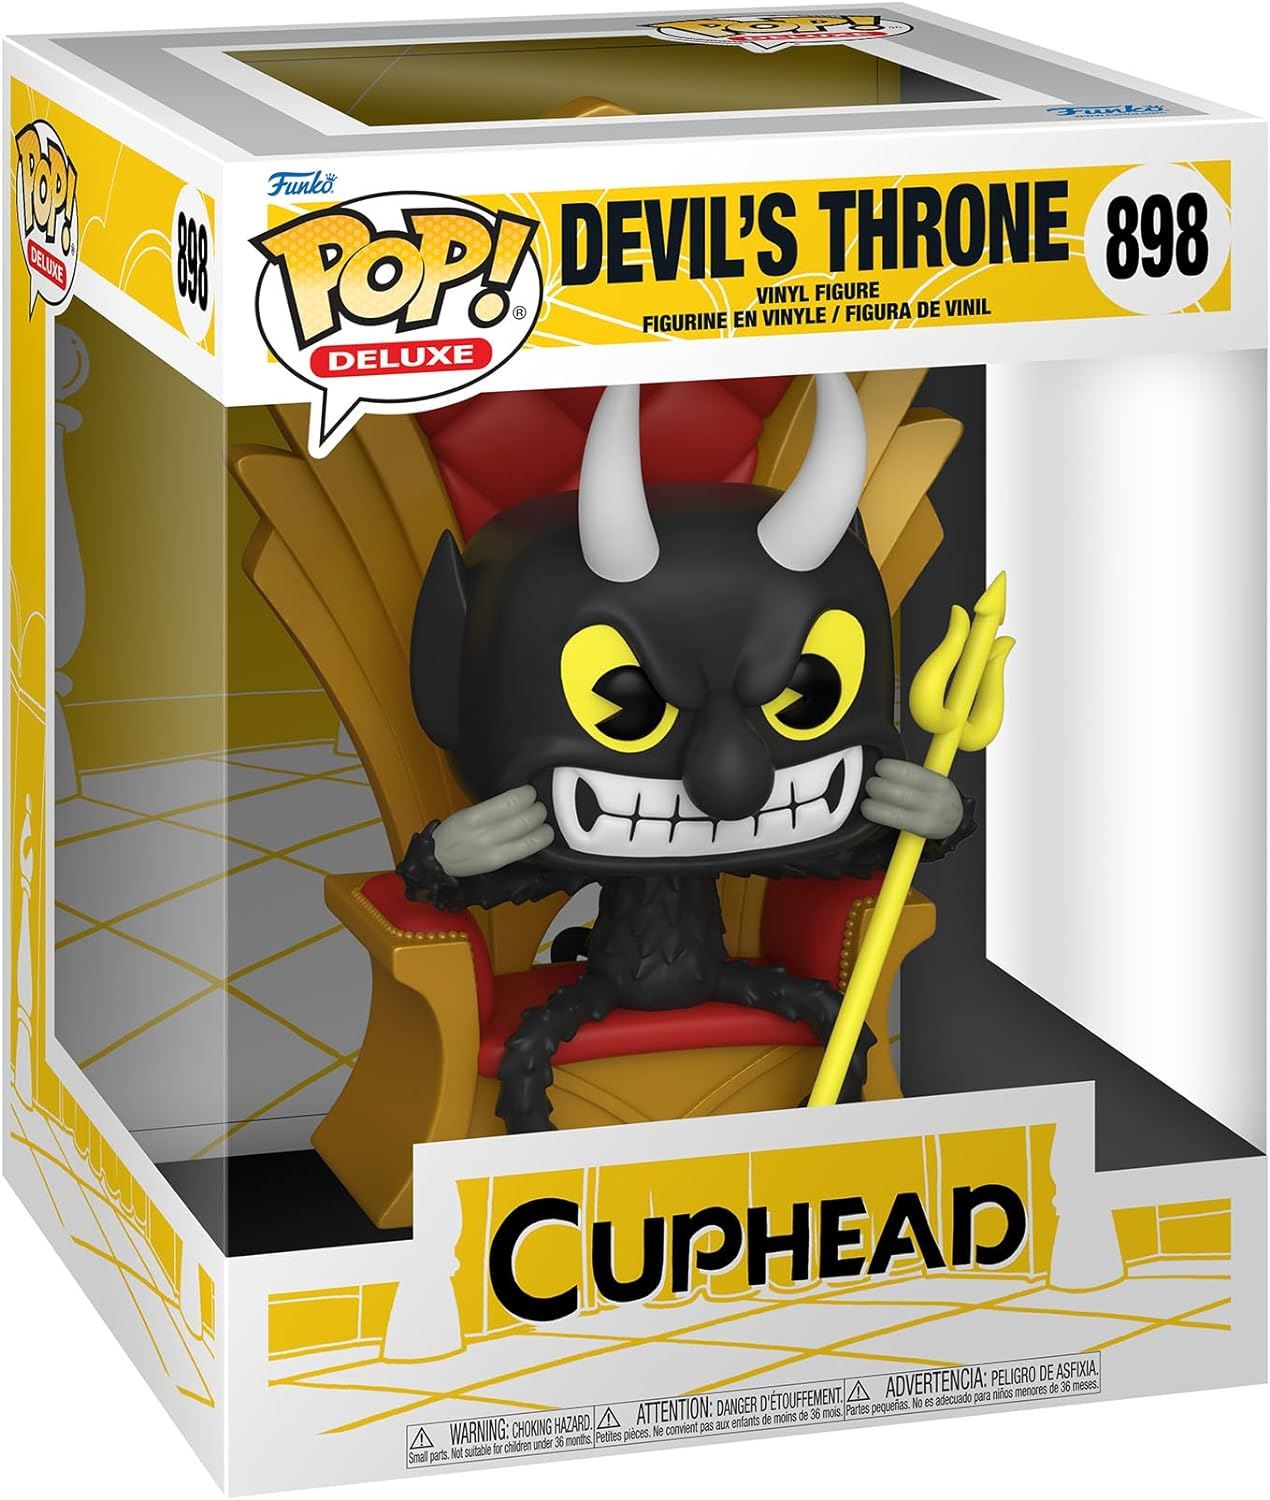 Funko Pop! Deluxe #898 Cuphead Devil's Throne Vinyl Figure